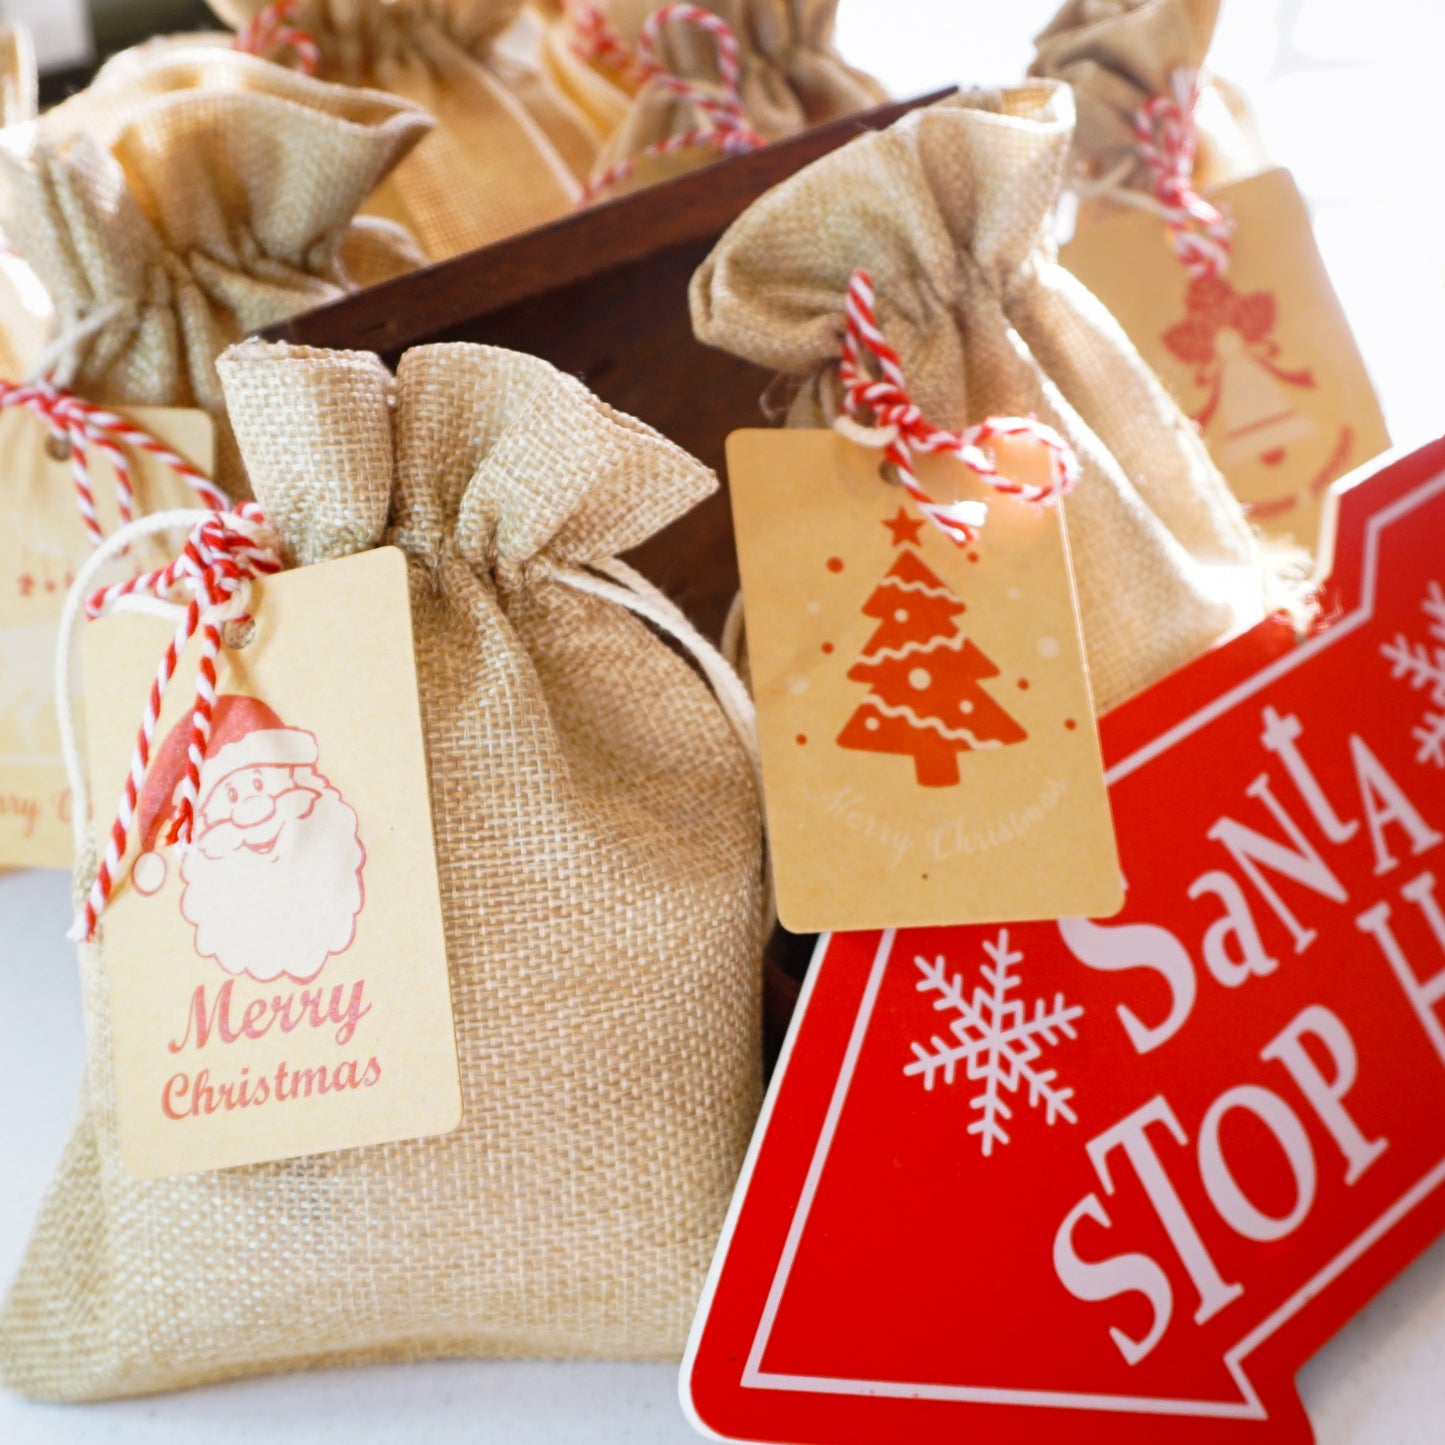 Washla shampoo and conditioner Christmas gift bag with a Santa gift tag